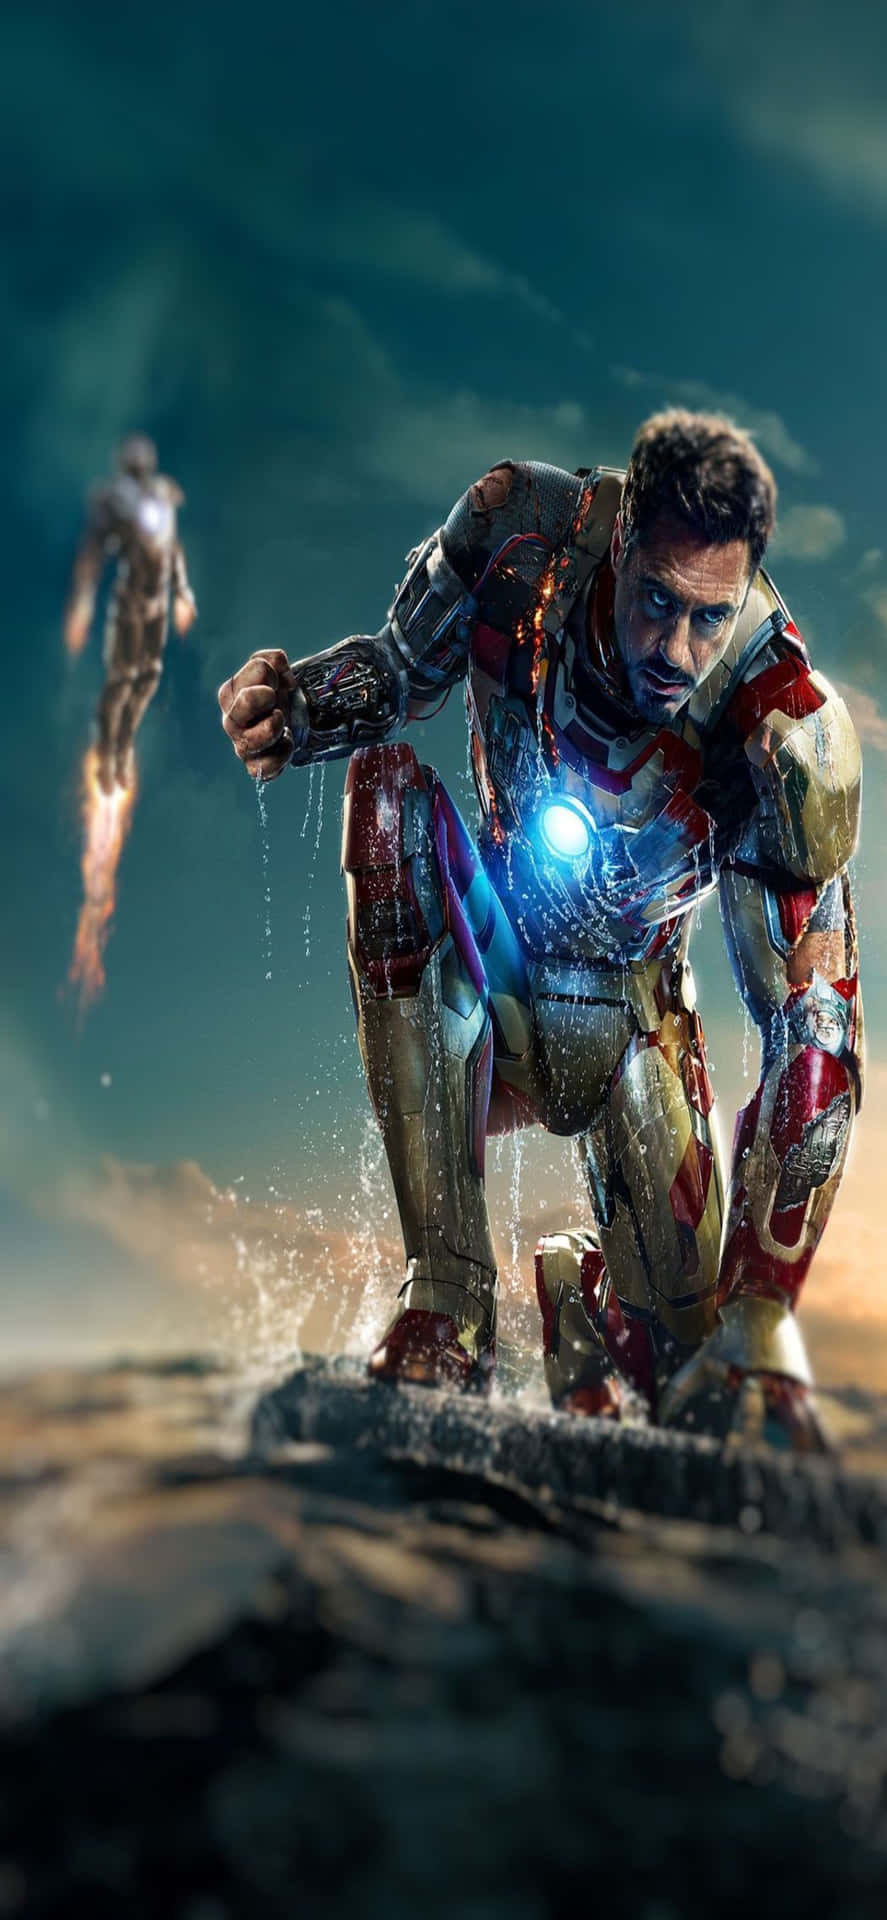 Fundode Tela Do Iphone X Do Homem De Ferro Tony Stark Sem Capacete.